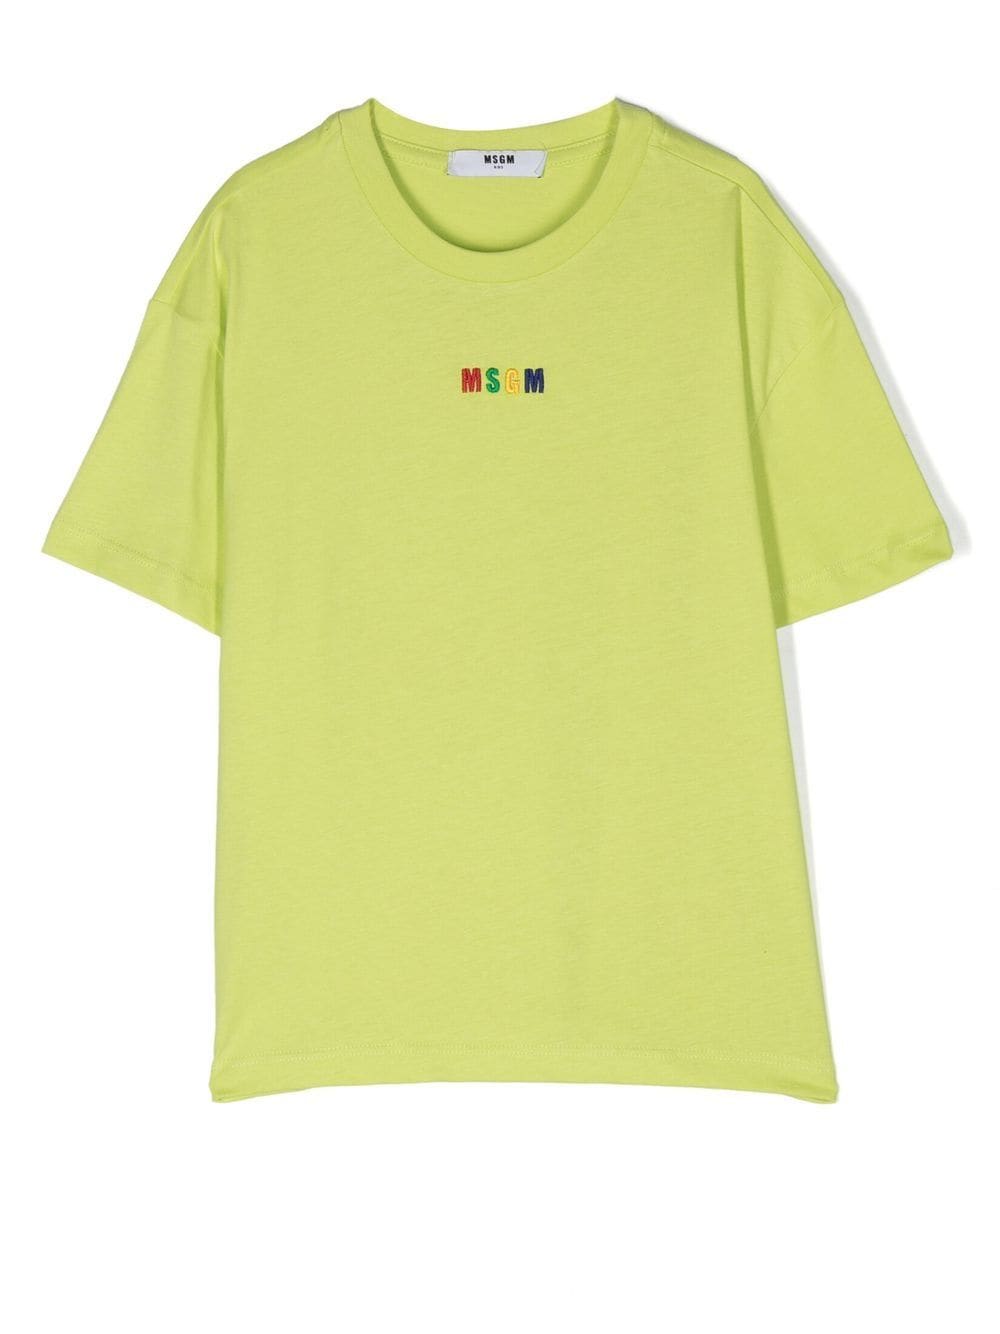 Green children's t-shirt with logo